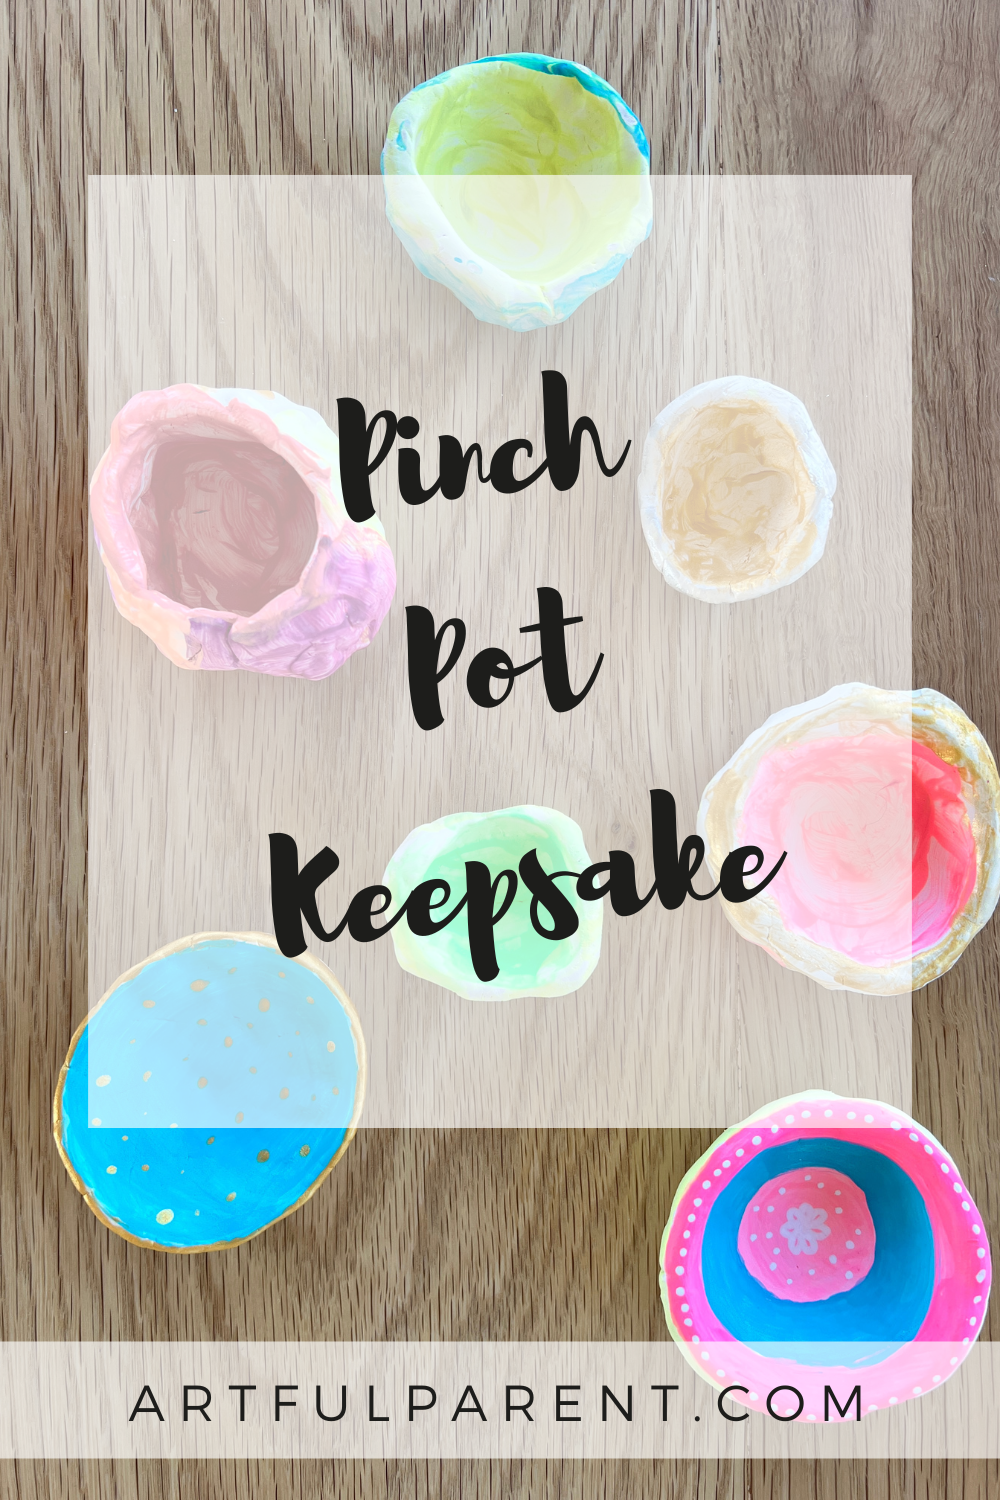 How to Make a Clay Pinch Pot Keepsake